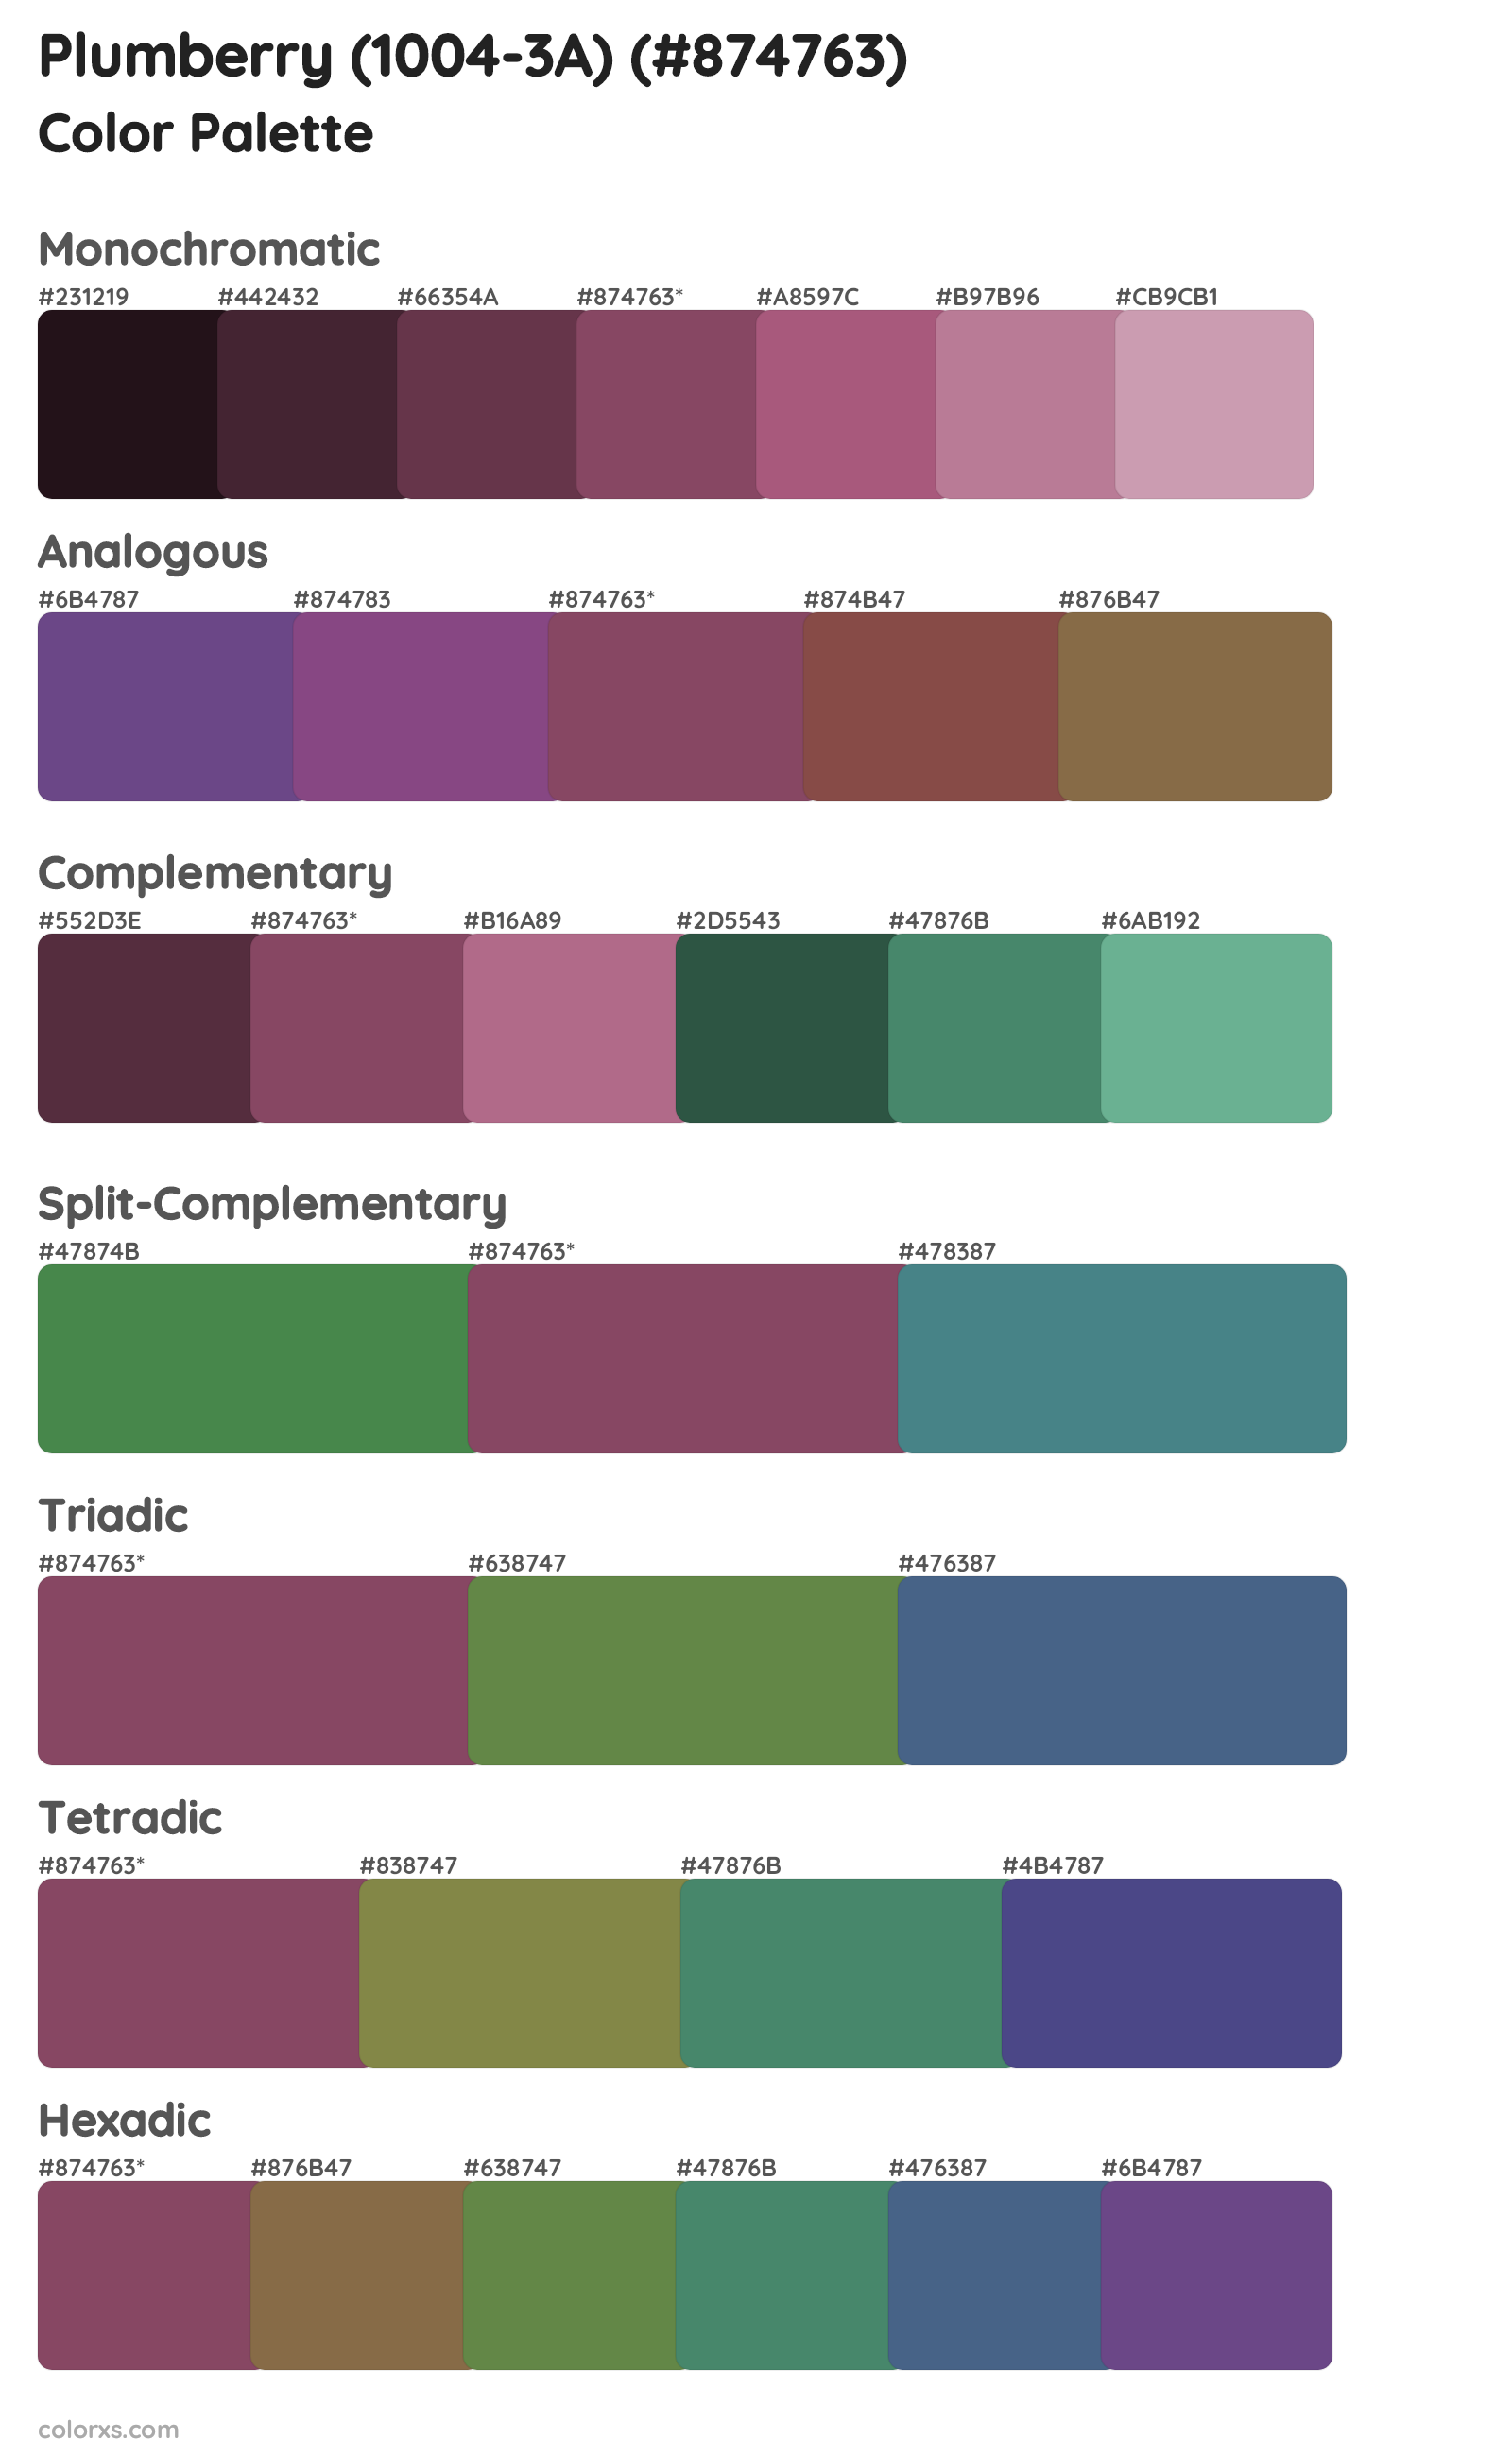 Plumberry (1004-3A) Color Scheme Palettes